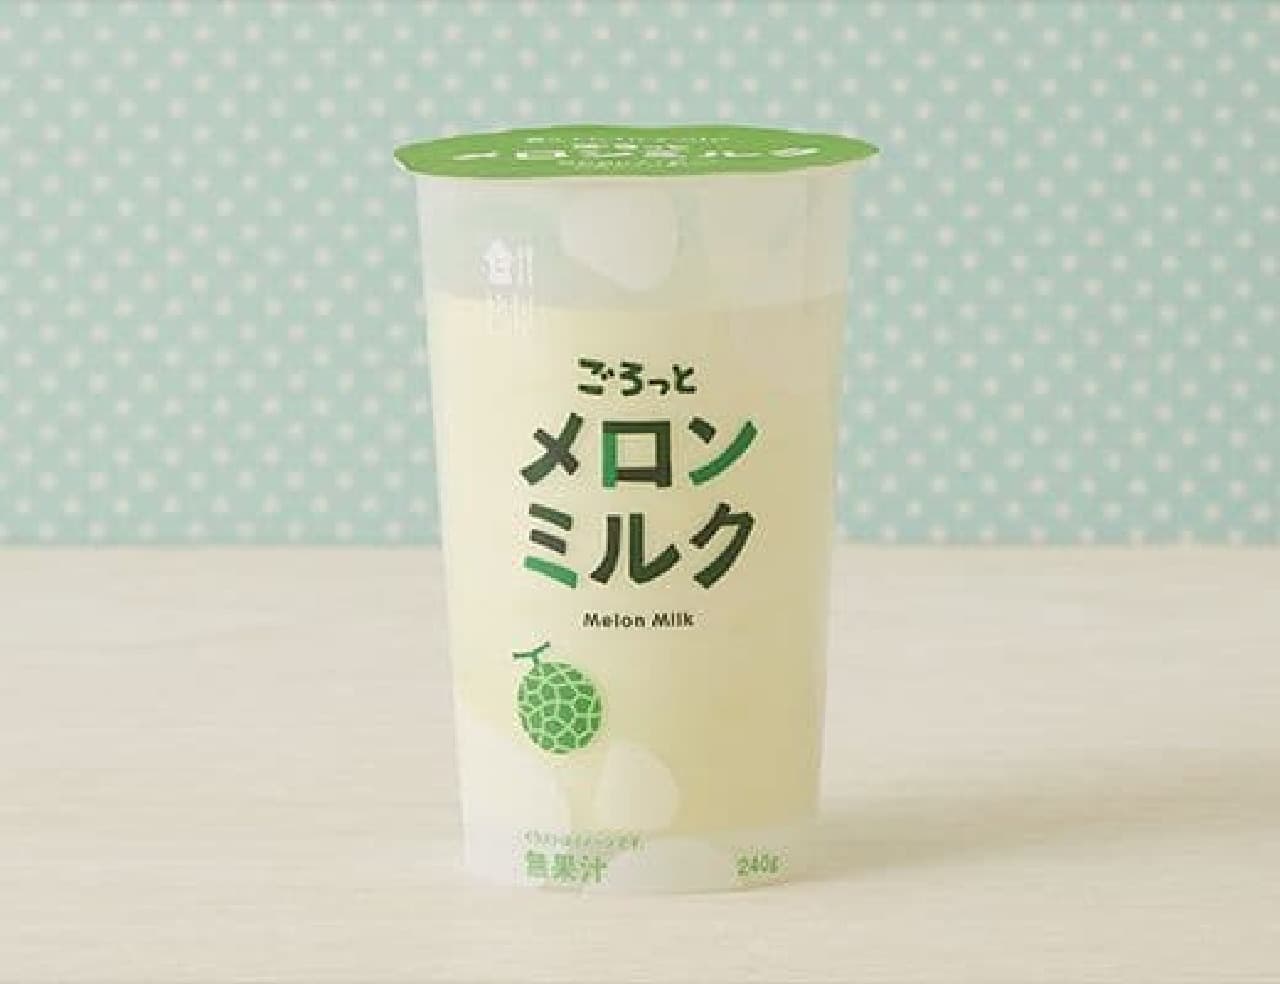 Lawson "Uchi Cafe Gorotto Melon Milk 240g"